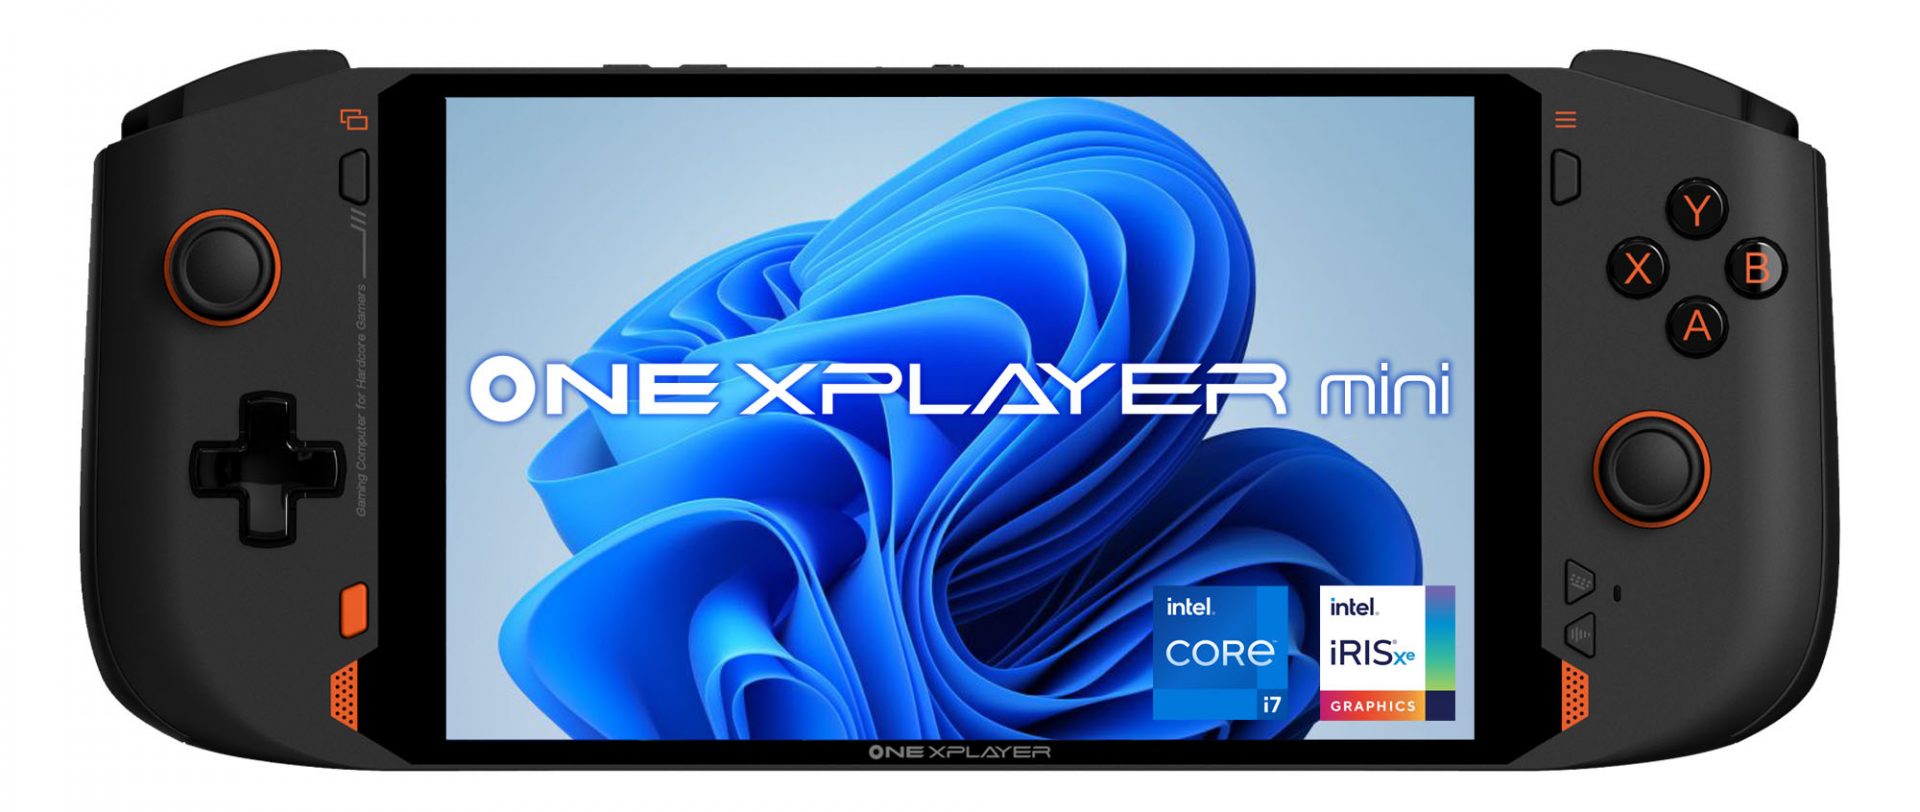 One XP Player mini